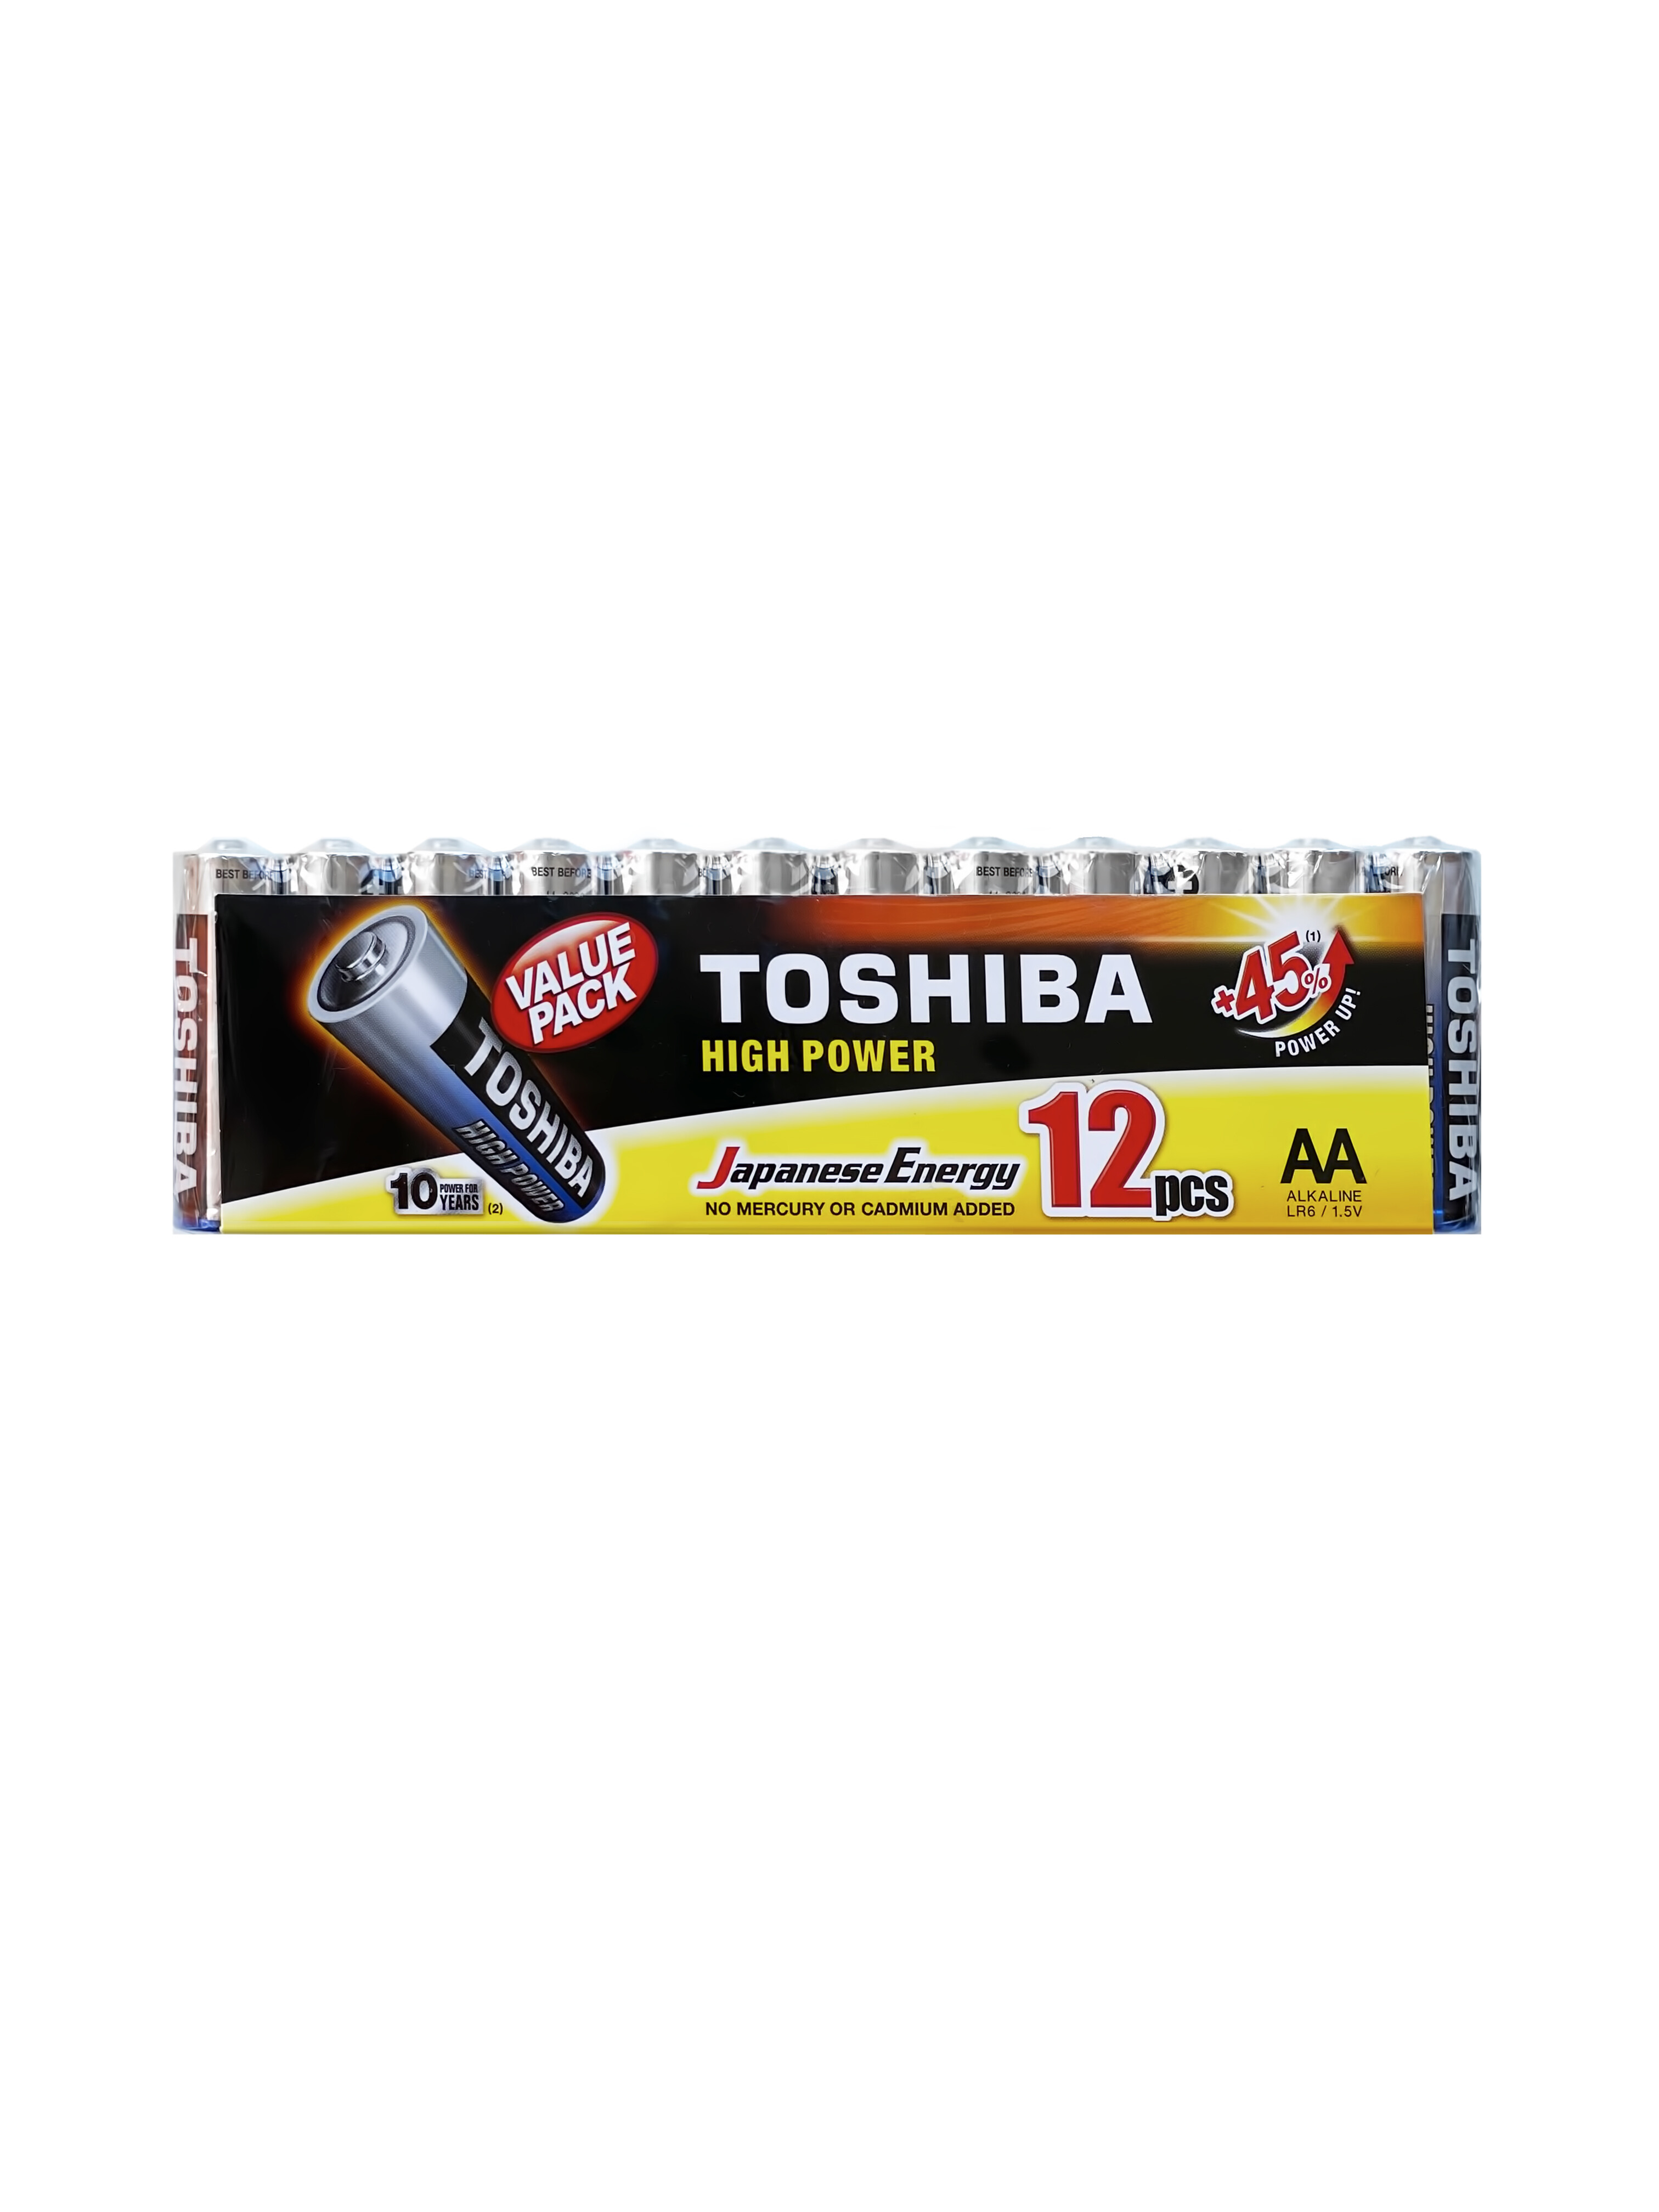 Батарейки Toshiba LR6 щелочные (alkaline) ПАЛЬЧИК High Power (12шт) AA 1,5V батарейки duracell lr6 2bl ultra power 2 шт б0038759